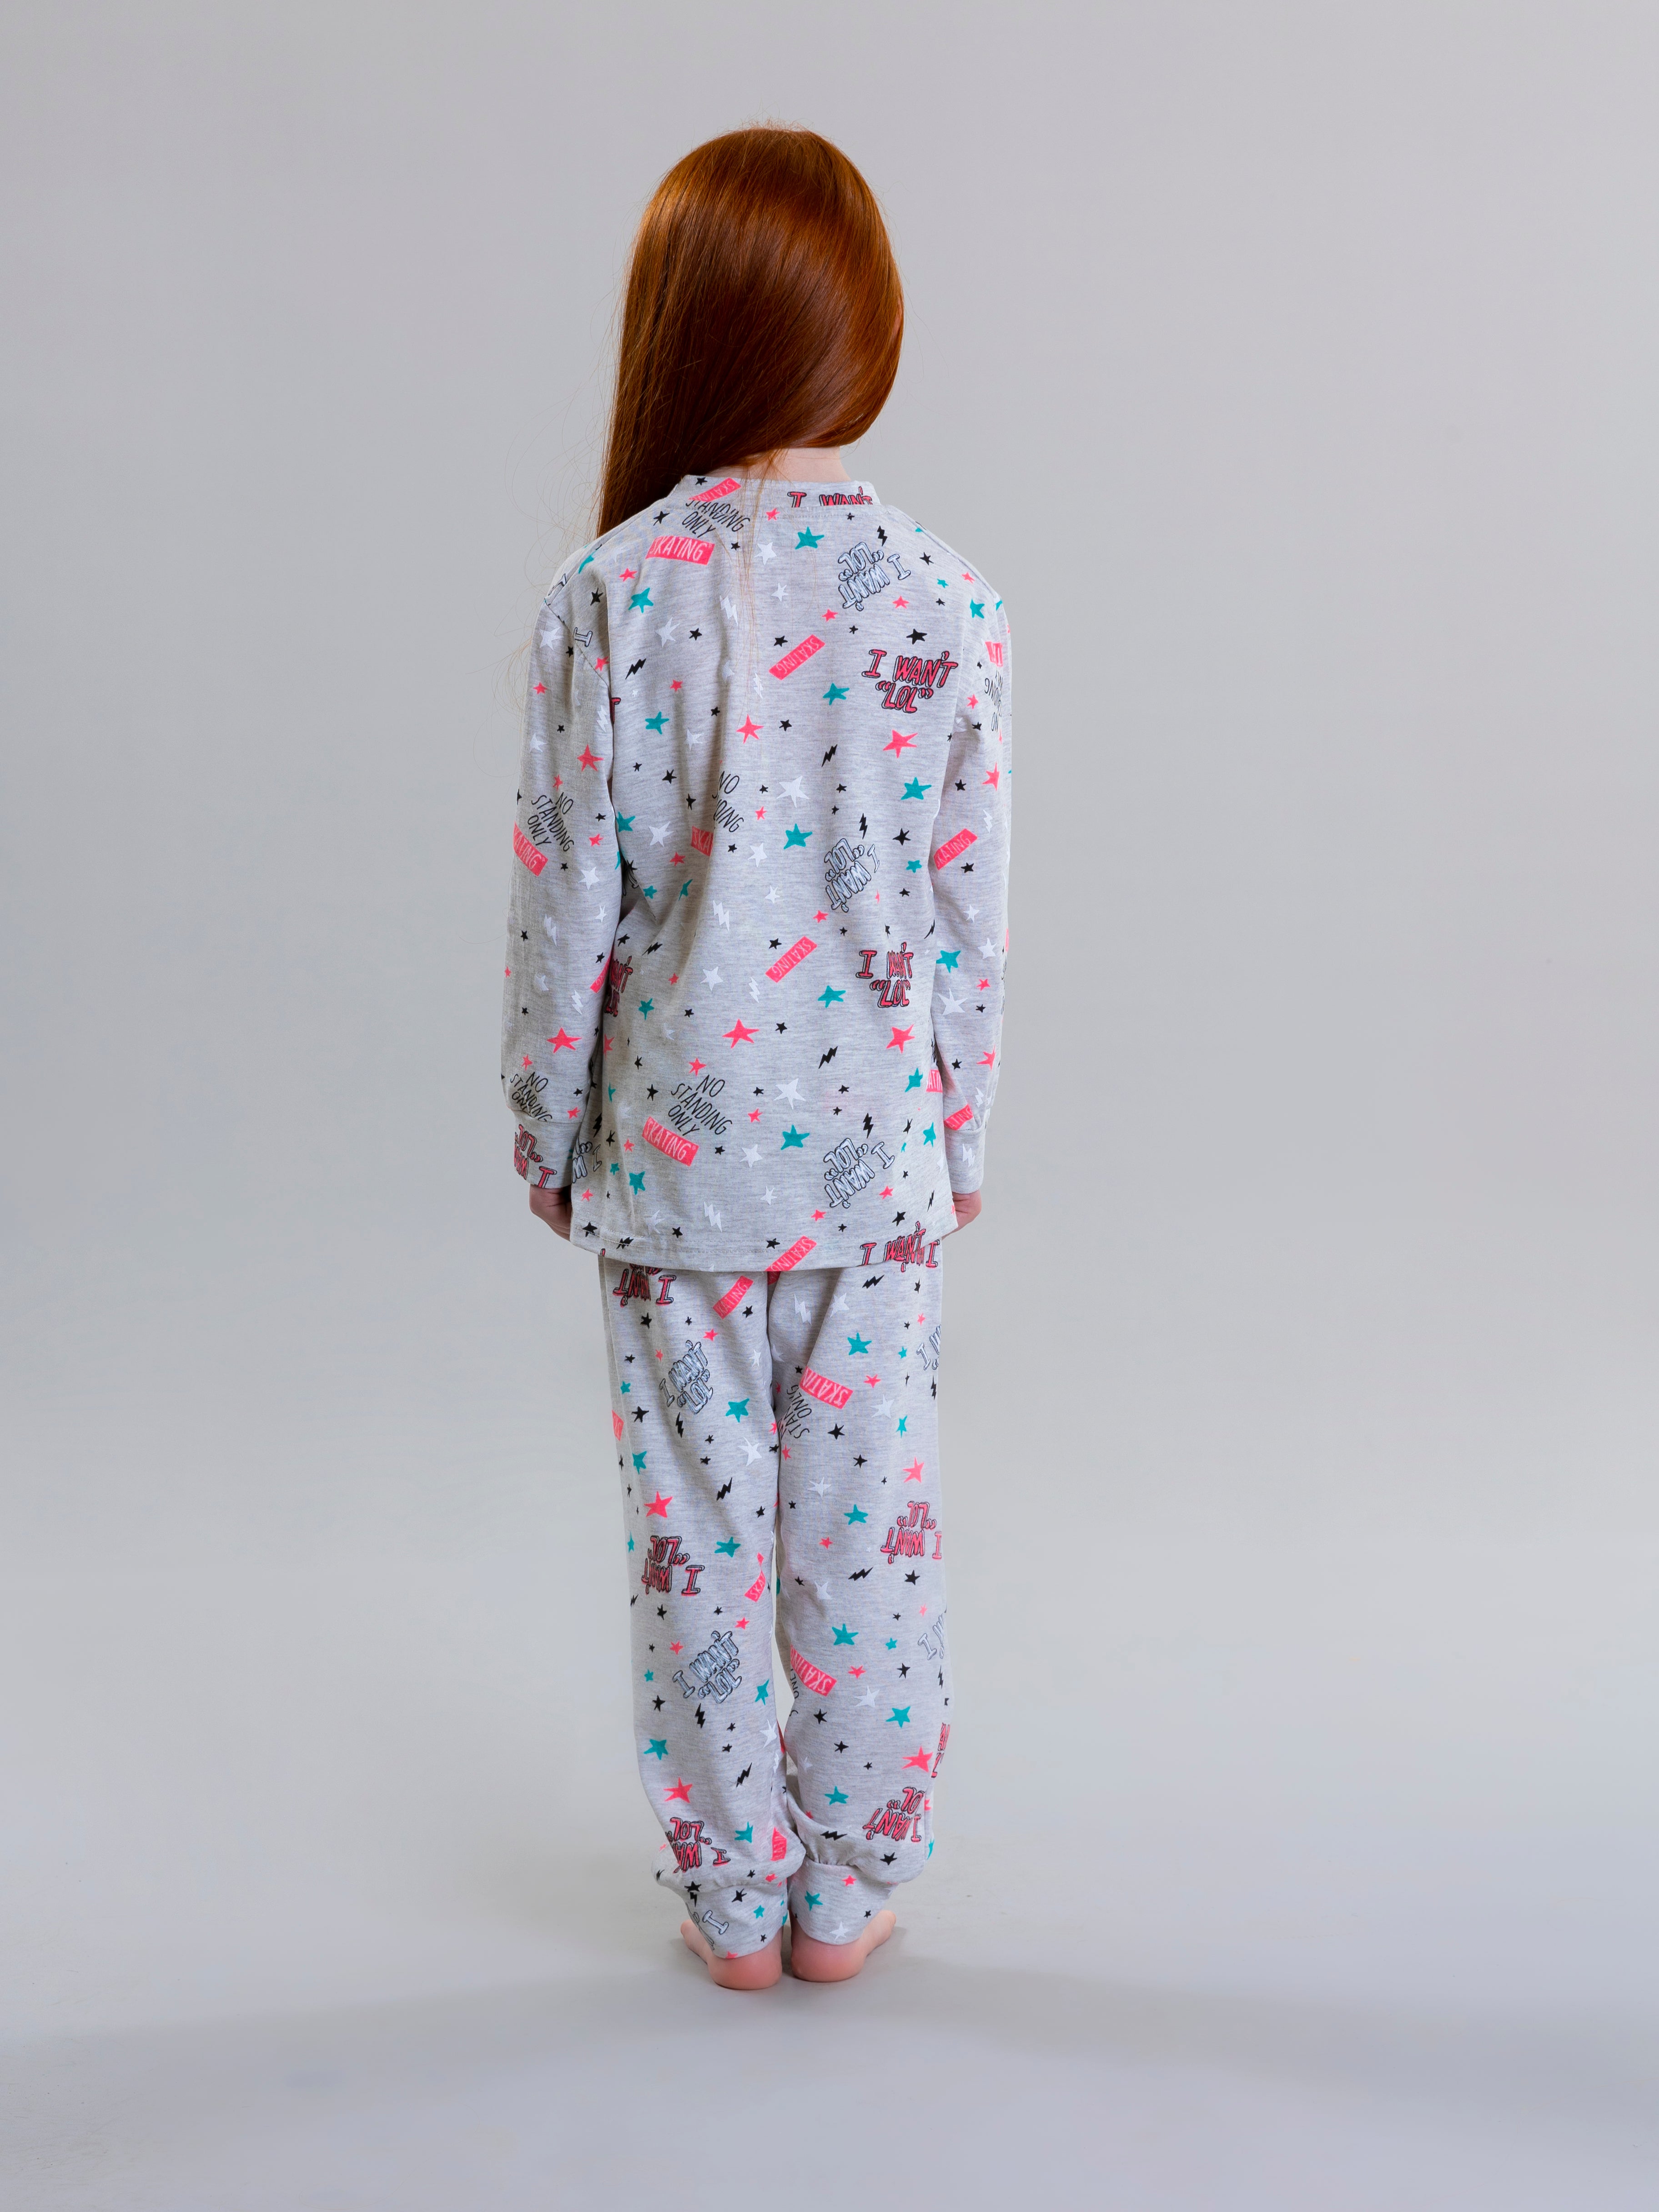 Star Lightning Pyjama Set For Girls - Grey - Pear